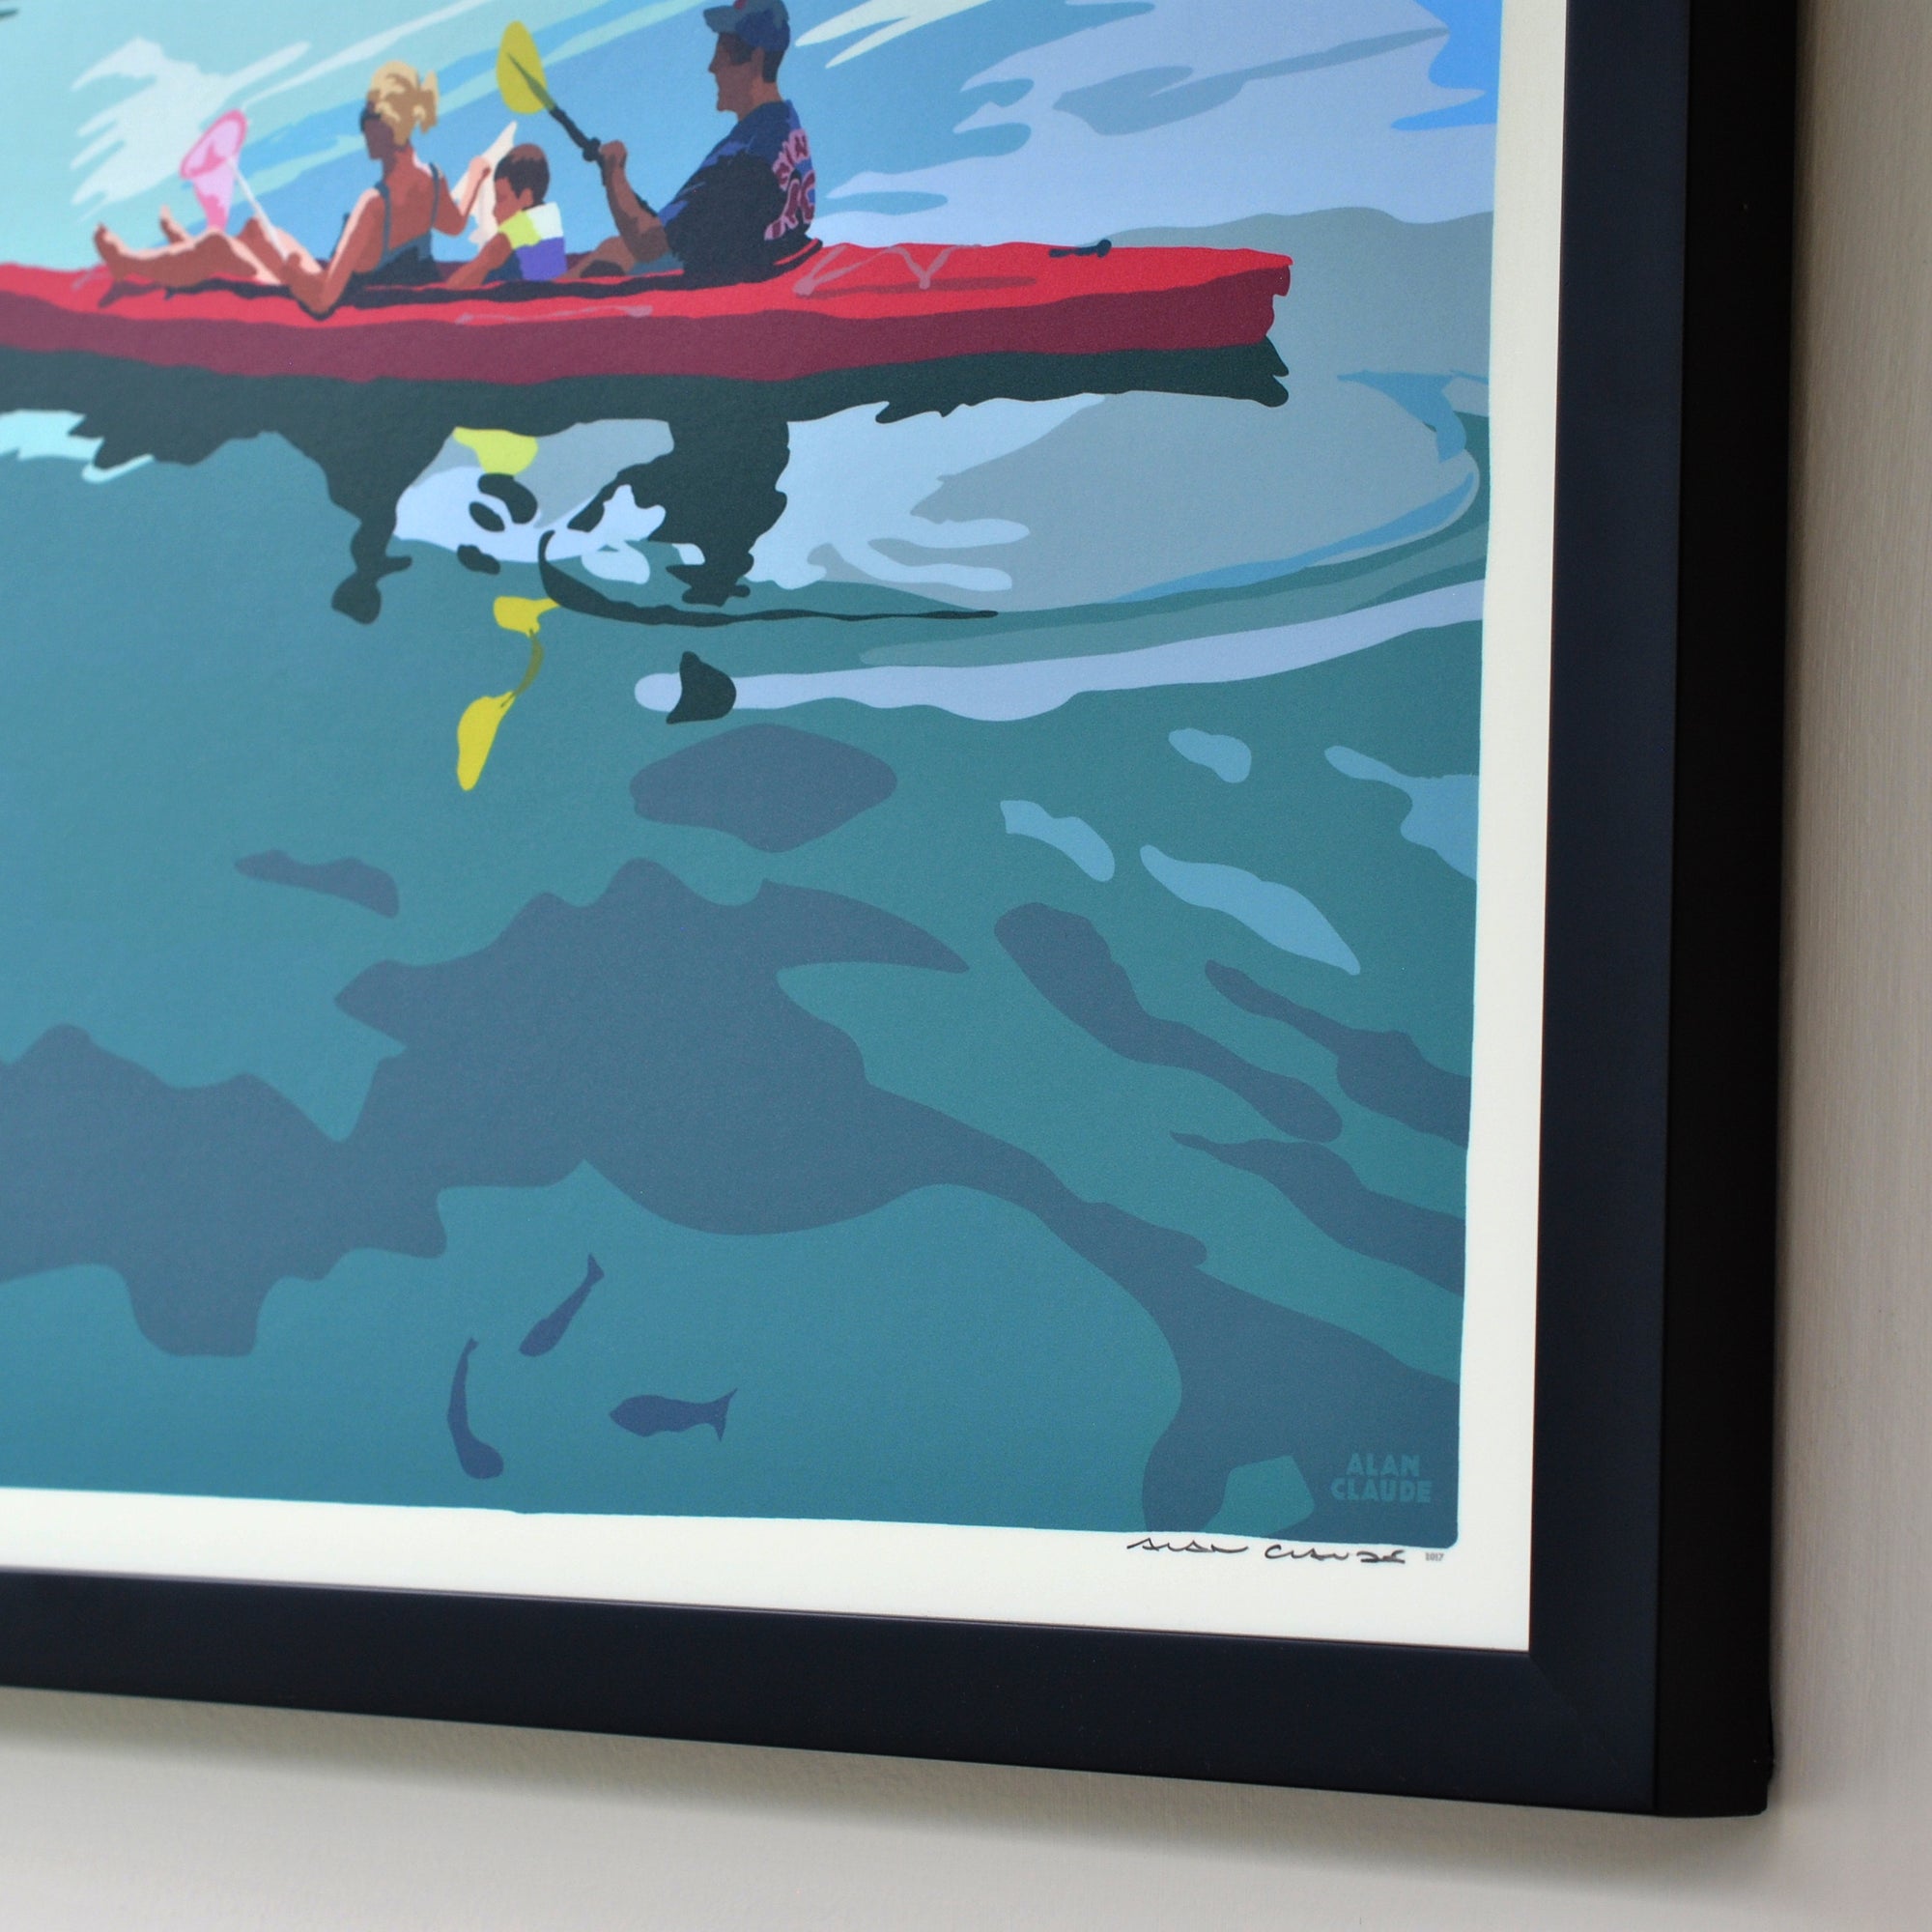 Kayaking on a Lake Art Print 18" x 24" Horizontal Framed Wall Poster By Alan Claude - Maine